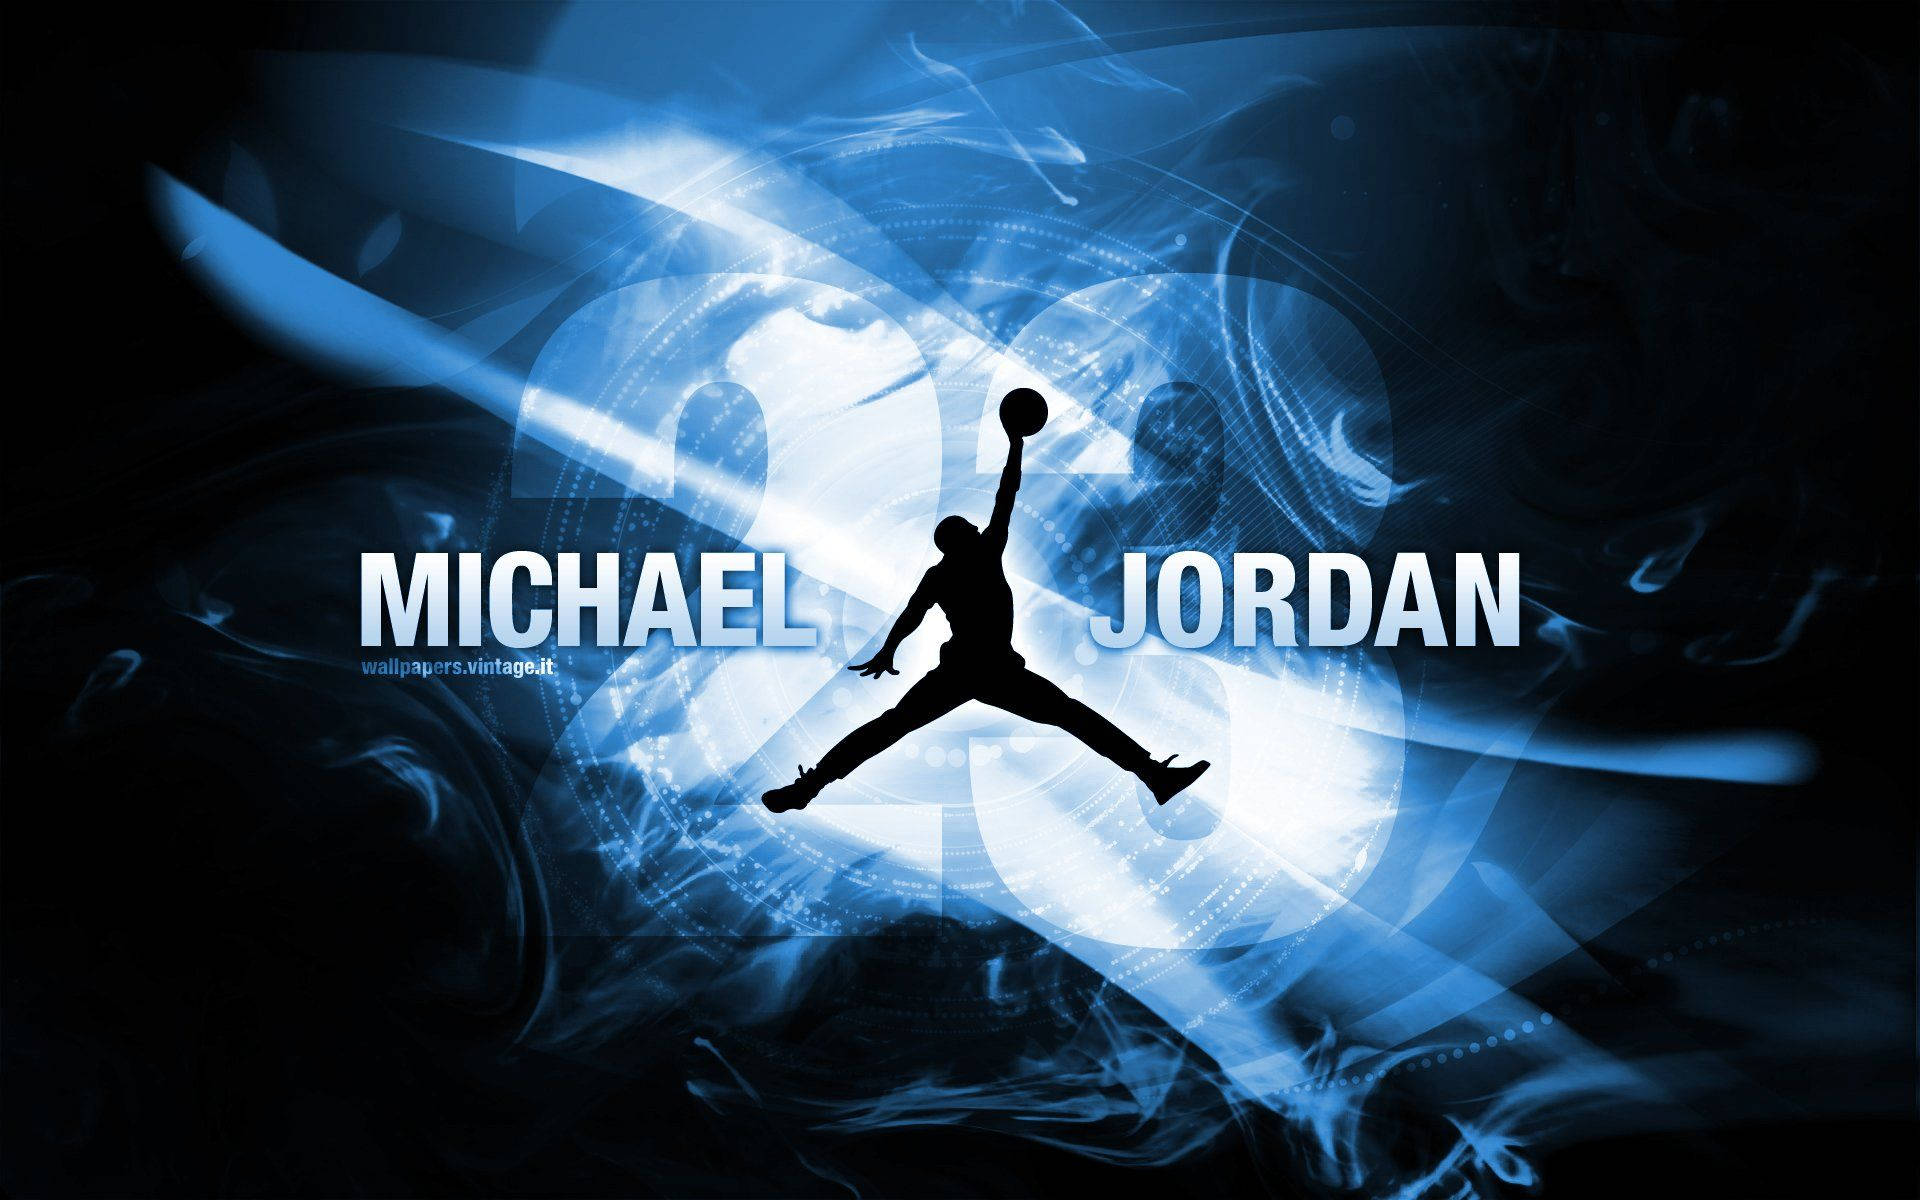 Michael Jordan shows off his legendary jumping ability Wallpaper